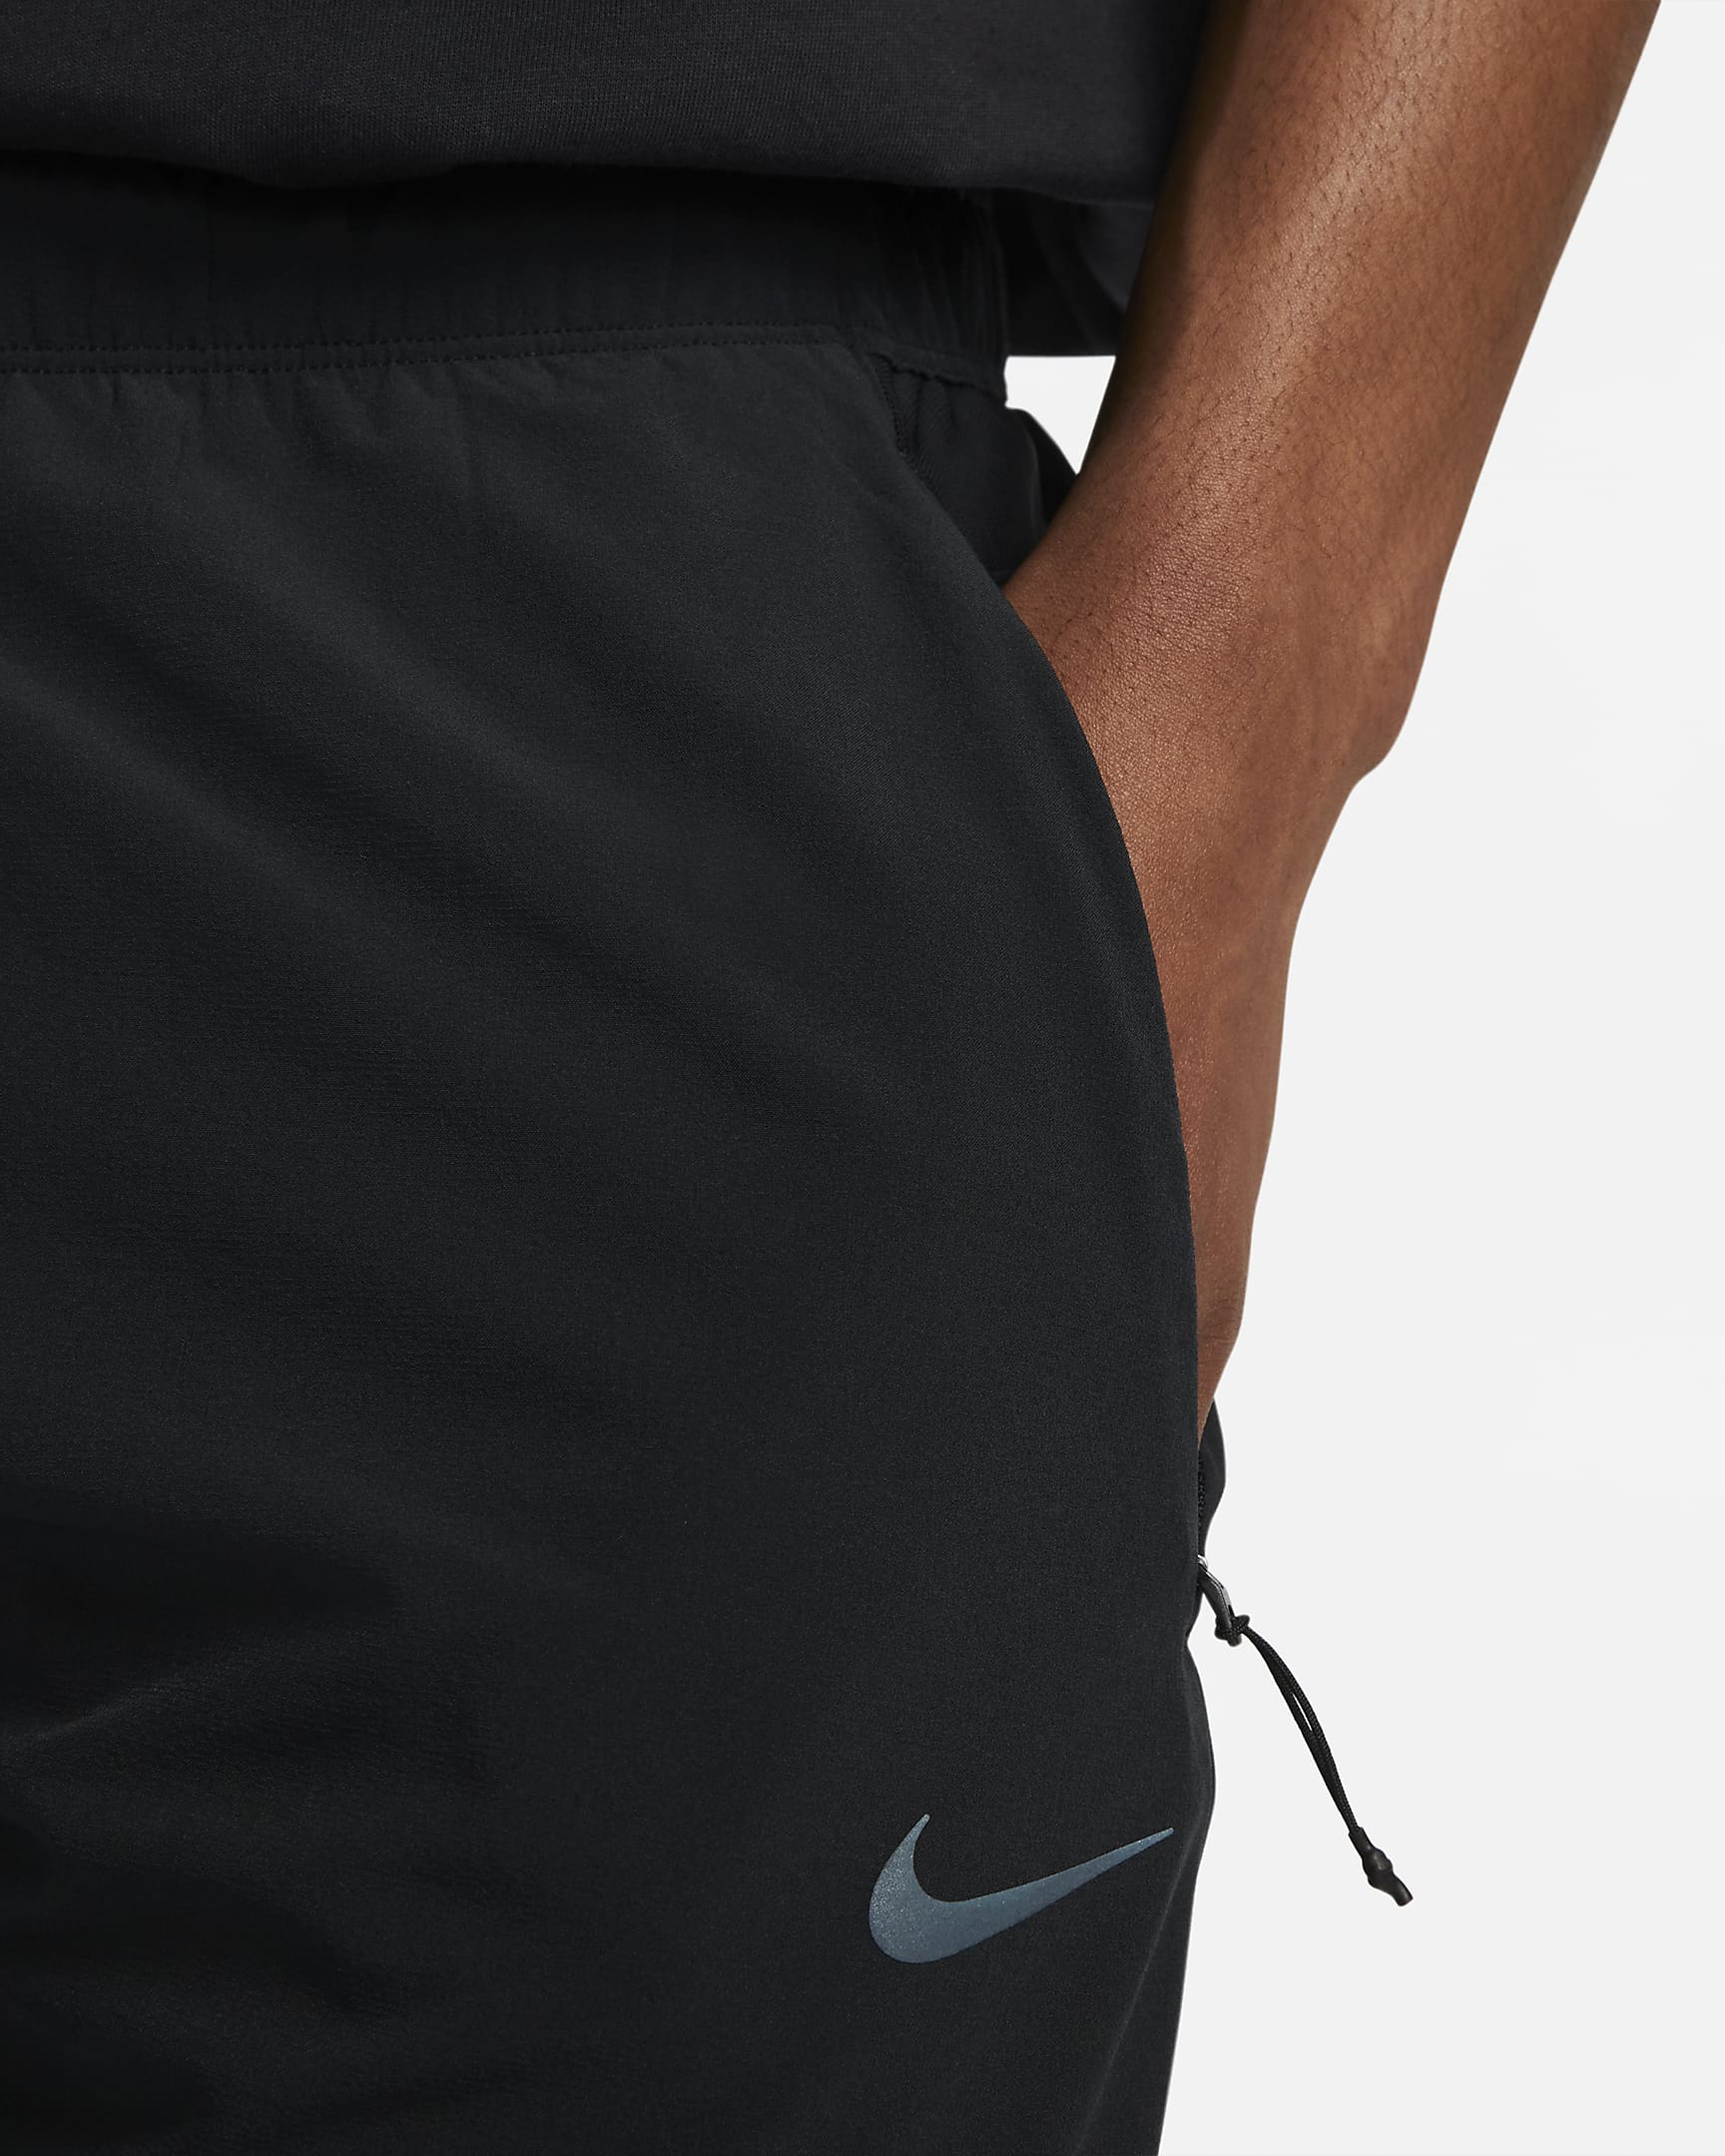 Nike Dri-FIT Running Division Phenom Men's Slim-Fit Running Trousers ...